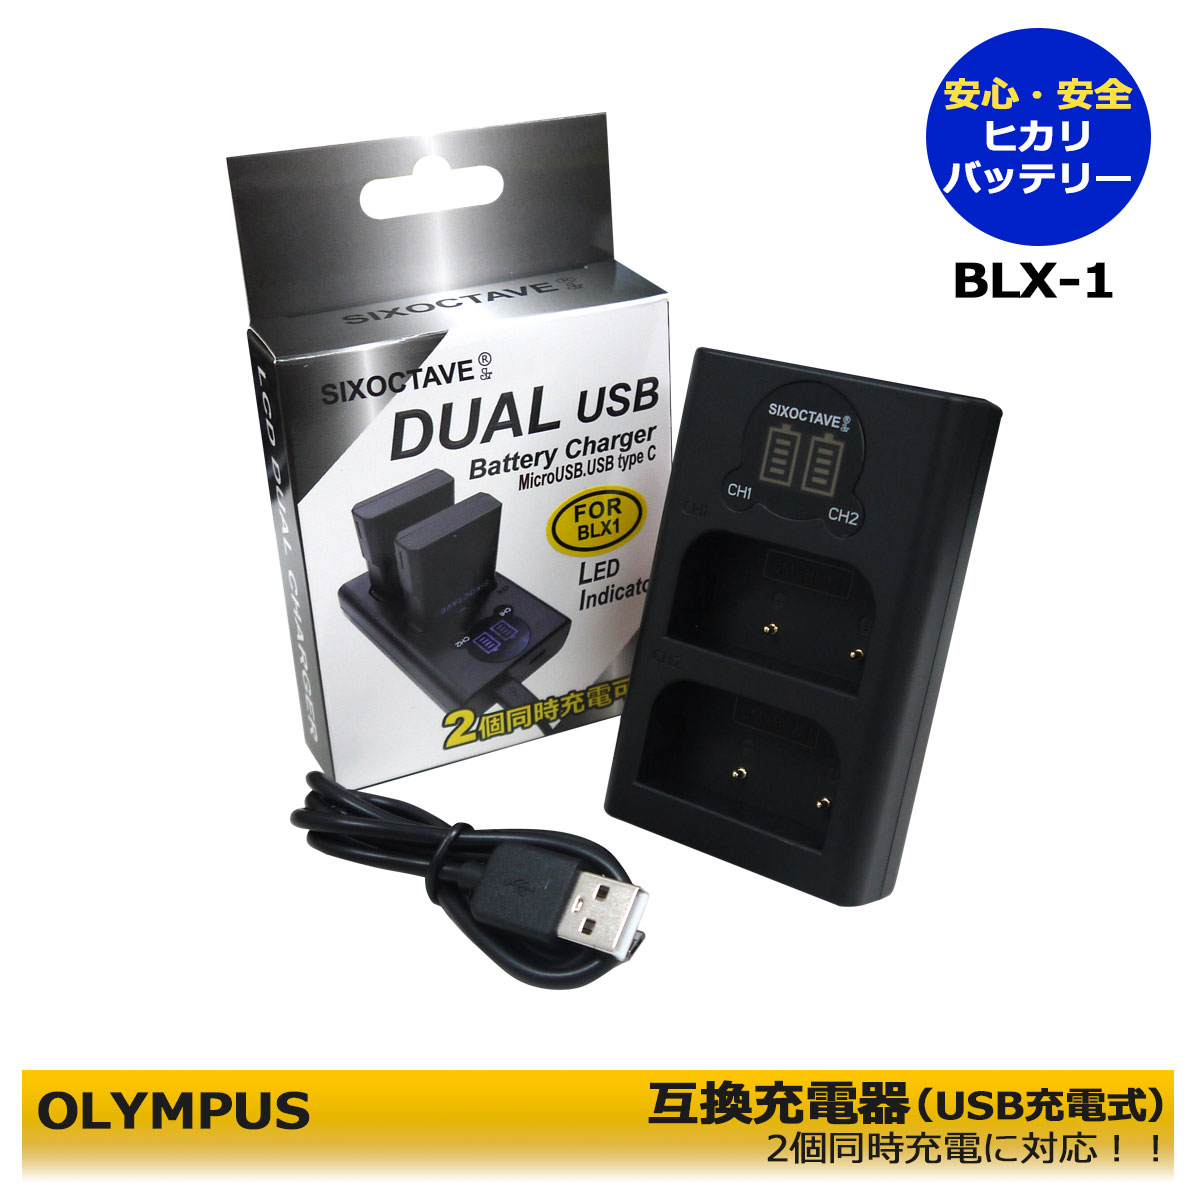 BLX-1 商品内容 互換充電用（USB充電式）　1個　※2個同時充電可能 規格 入力：microUSB　5V-2.1A(MIN) 　　　 USB-C　5V-2.1A(MIN) 出力：8.4V-700mAx1 　　　　　 500mAx2 対応機種 OM SYSTEM OM-1 OM SYSTEM OM-1 Mark II 互換充電器：BCX-1 / BLX-1 対応バッテリー：BLX-1 仕様 ●LCD充電量表示機能搭載。 ●2個同時に充電も可能。（1個でも充電対応） ●保証：ご購入日より6ヶ月保証。 （PL保険（生産物賠償責任保険）加入済み。 ●純正＆互換バッテリー共に充電可能。 ●USB端子がある機器に接続し、どこでも充電可能。 (Multi USBコード付属) ●CEマーク（欧州連合安全規制）製品。 ●本製品には過電流保護、過充電防止、過放電防止の保護回路が内蔵。